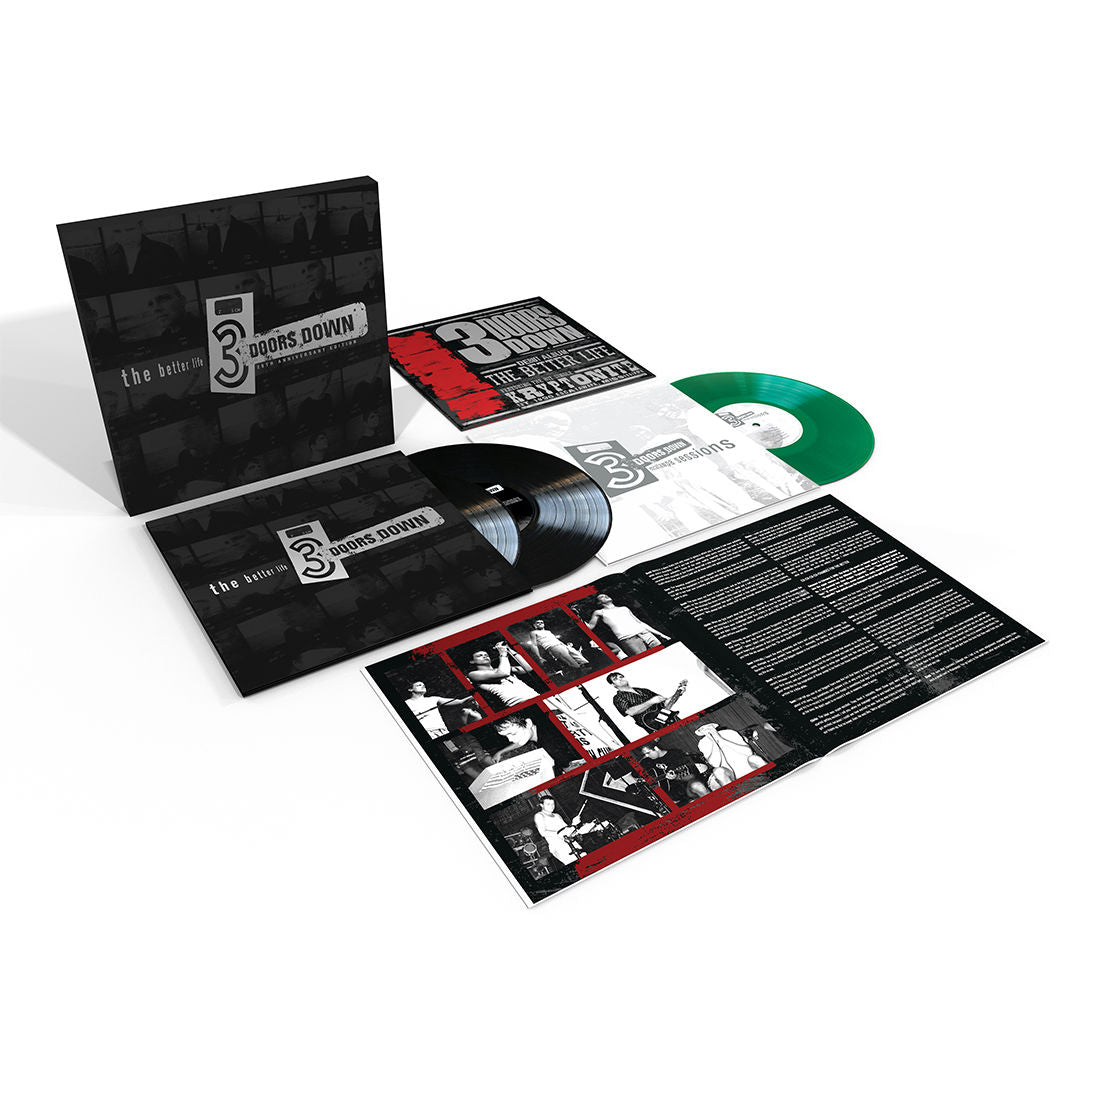 3 Doors Down - The Better Life: Exclusive 20th Anniversary 3LP Vinyl Box Set